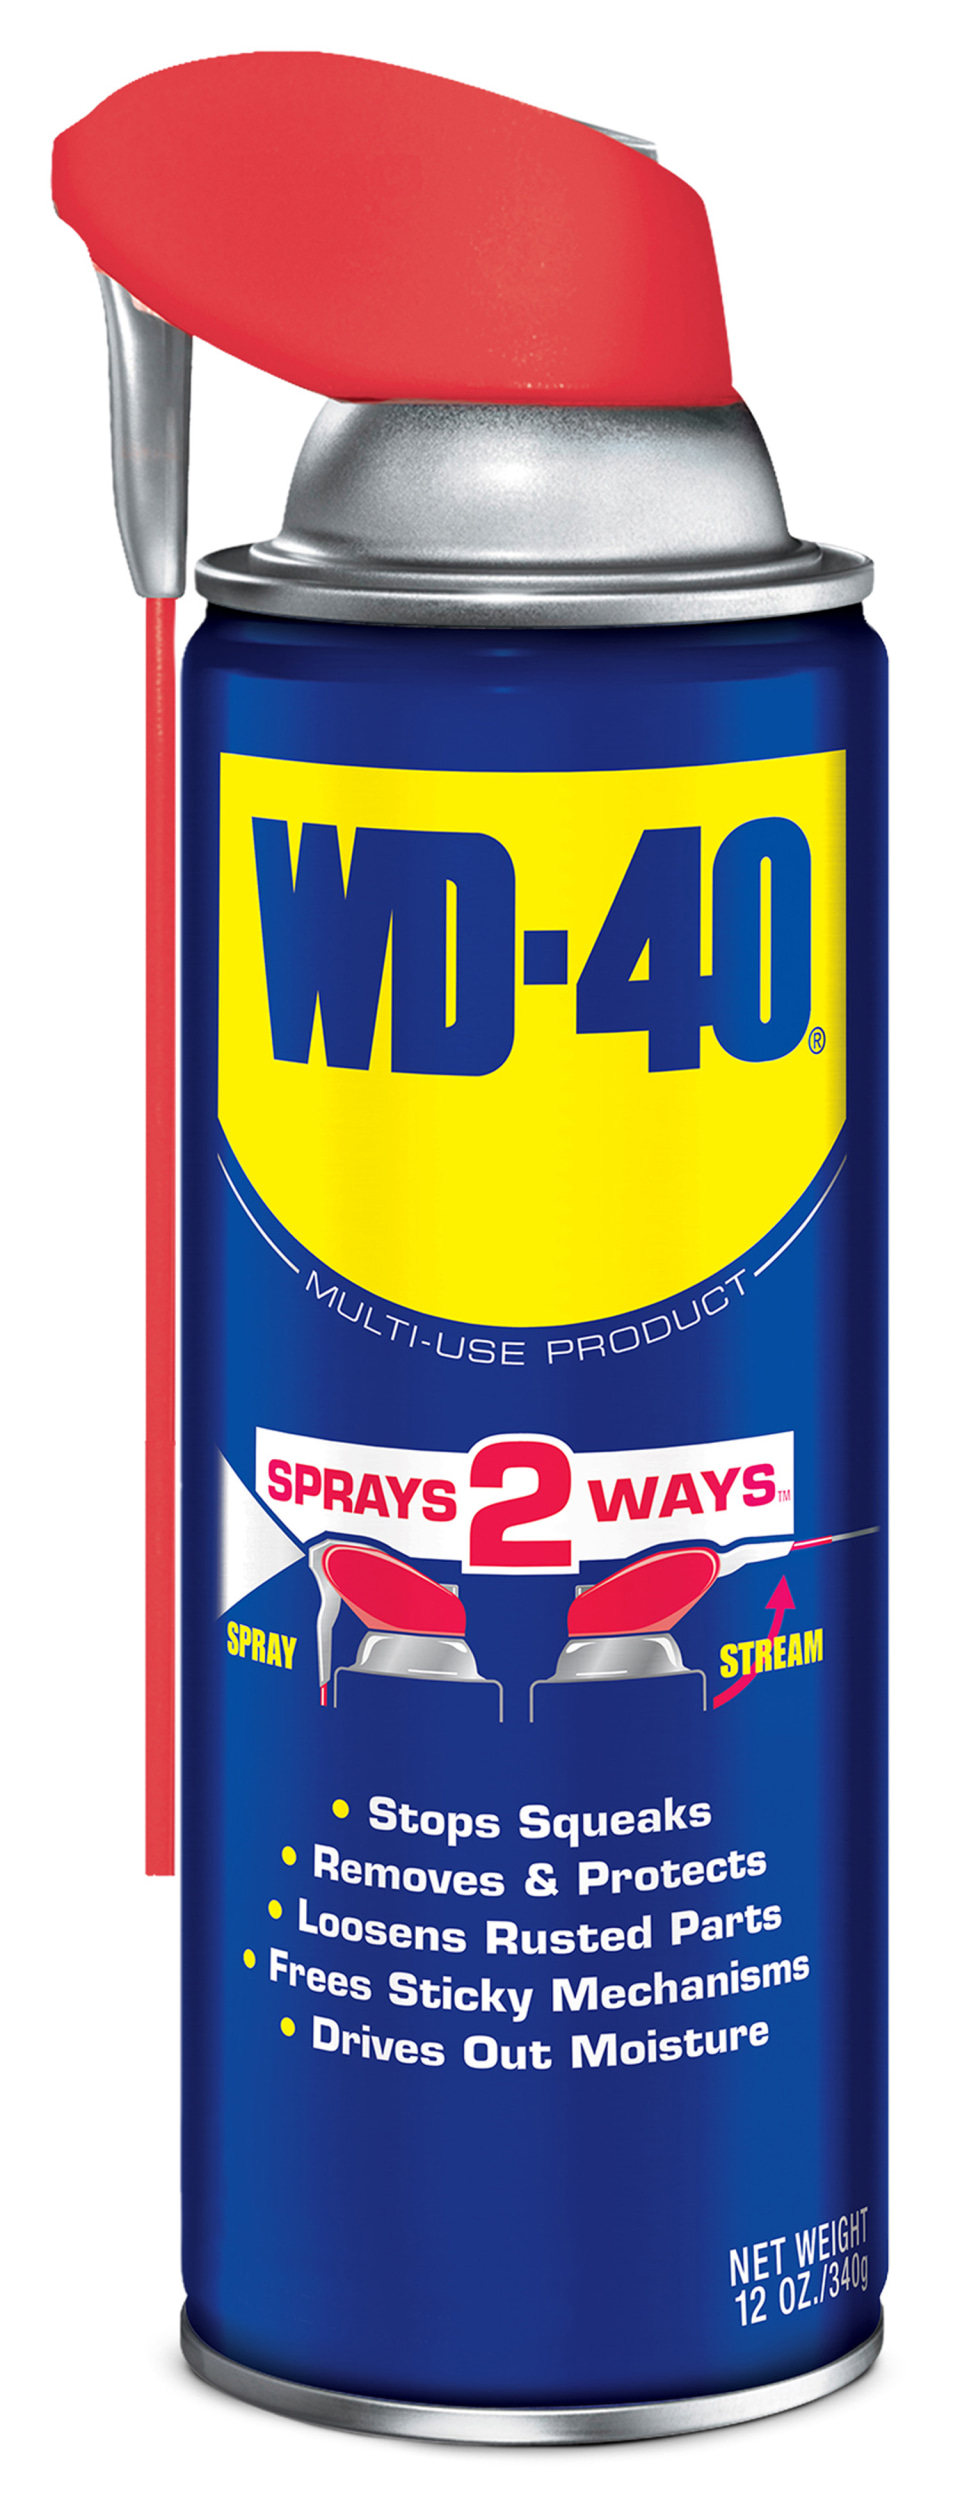 Original WD-40 Formula, Multi-Use Product With Smart Straw Sprays 2 Ways, Multi-Purpose Lubricant Spray, 12 oz - image 2 of 9